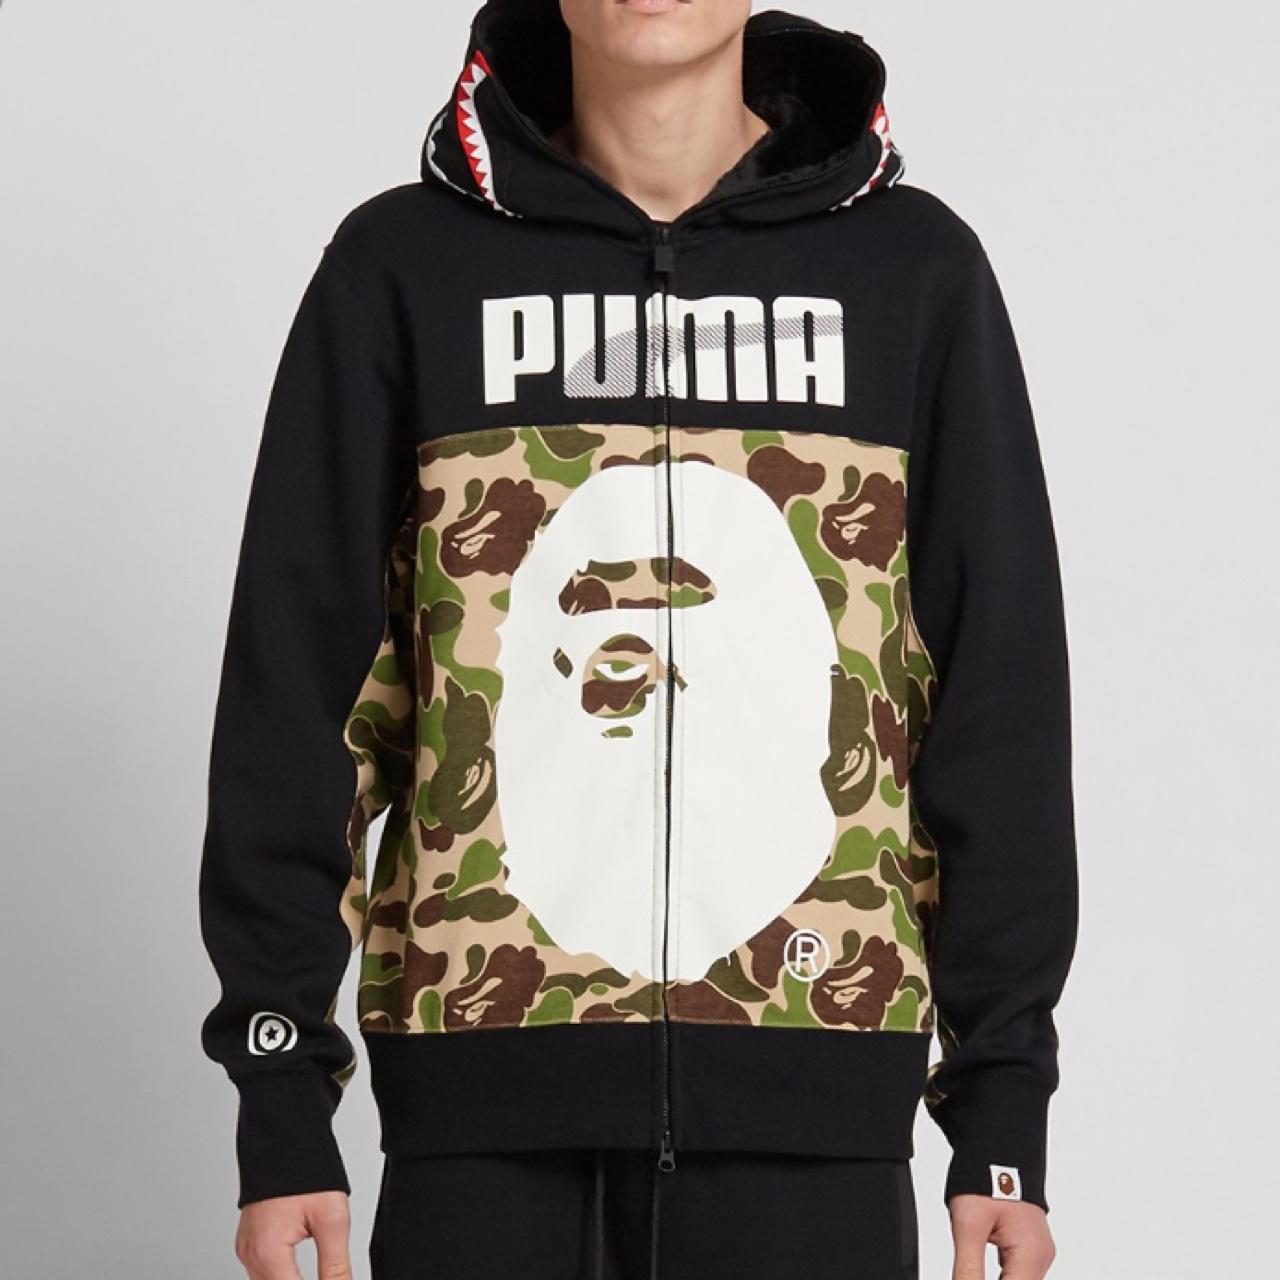 100% authentic x Puma hoodie. Size:... - Depop